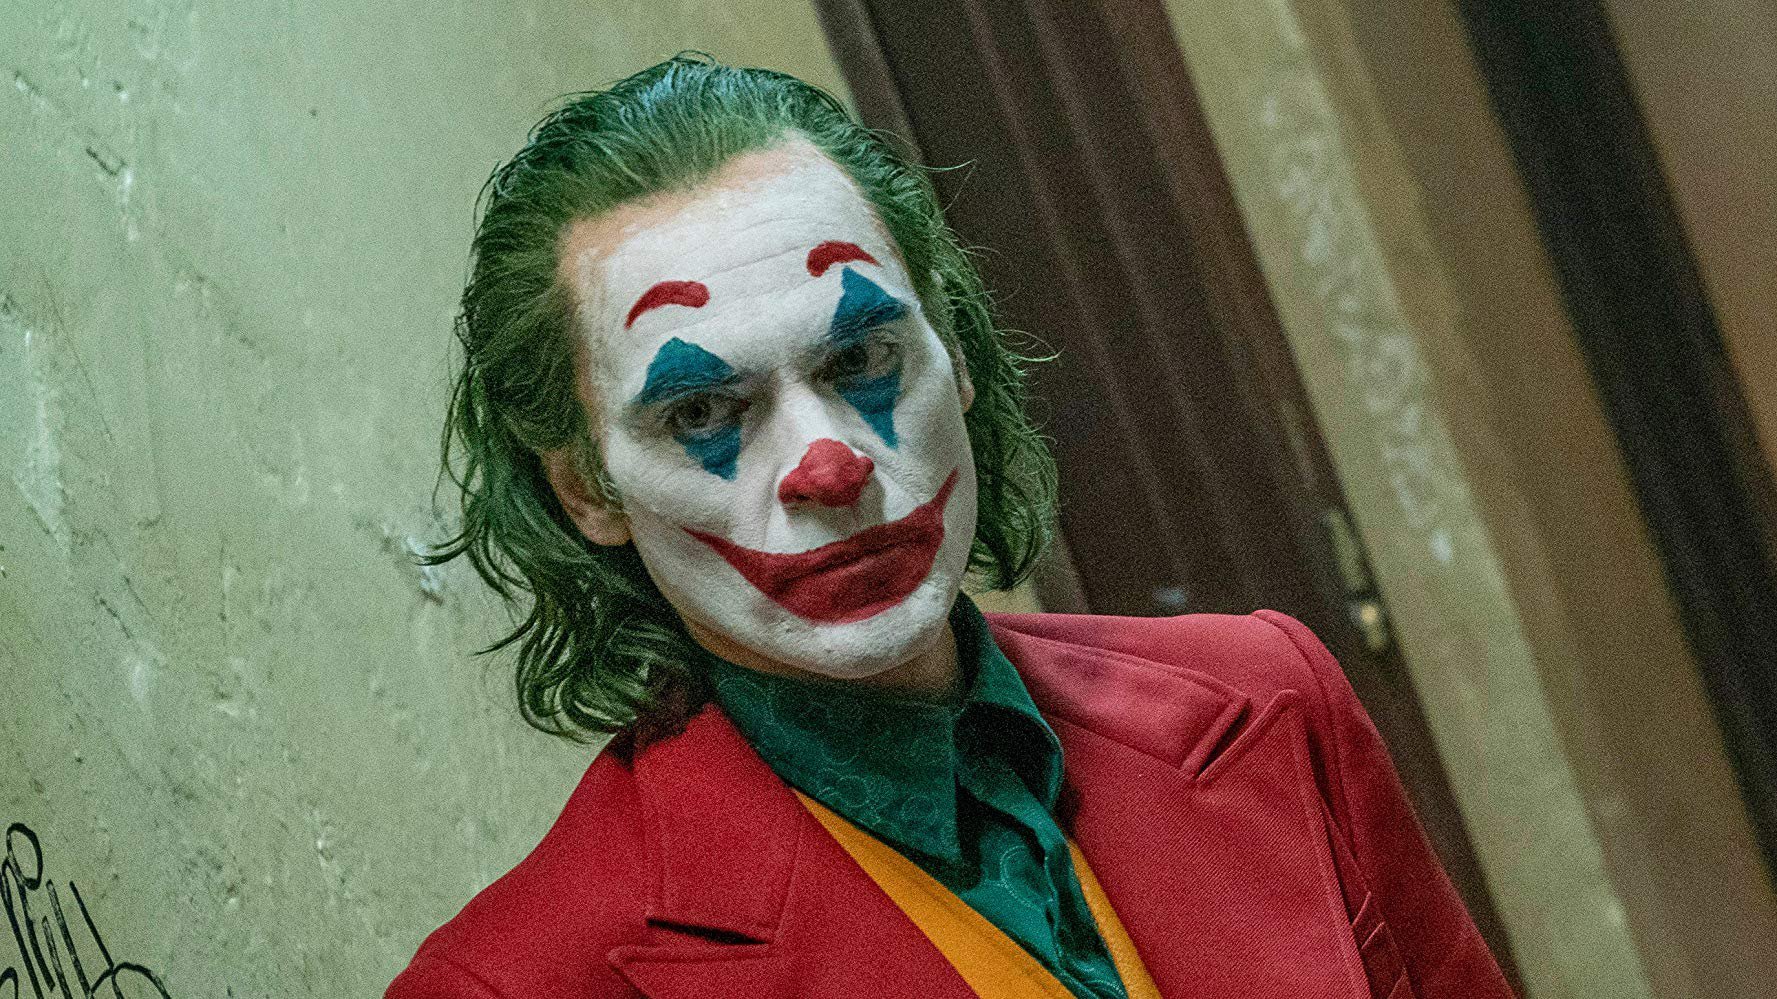 Joker : Το υπουργείο Πολιτισμού δεν έδωσε εντολή για τις αστυνομικές εφόδους στα σινεμά